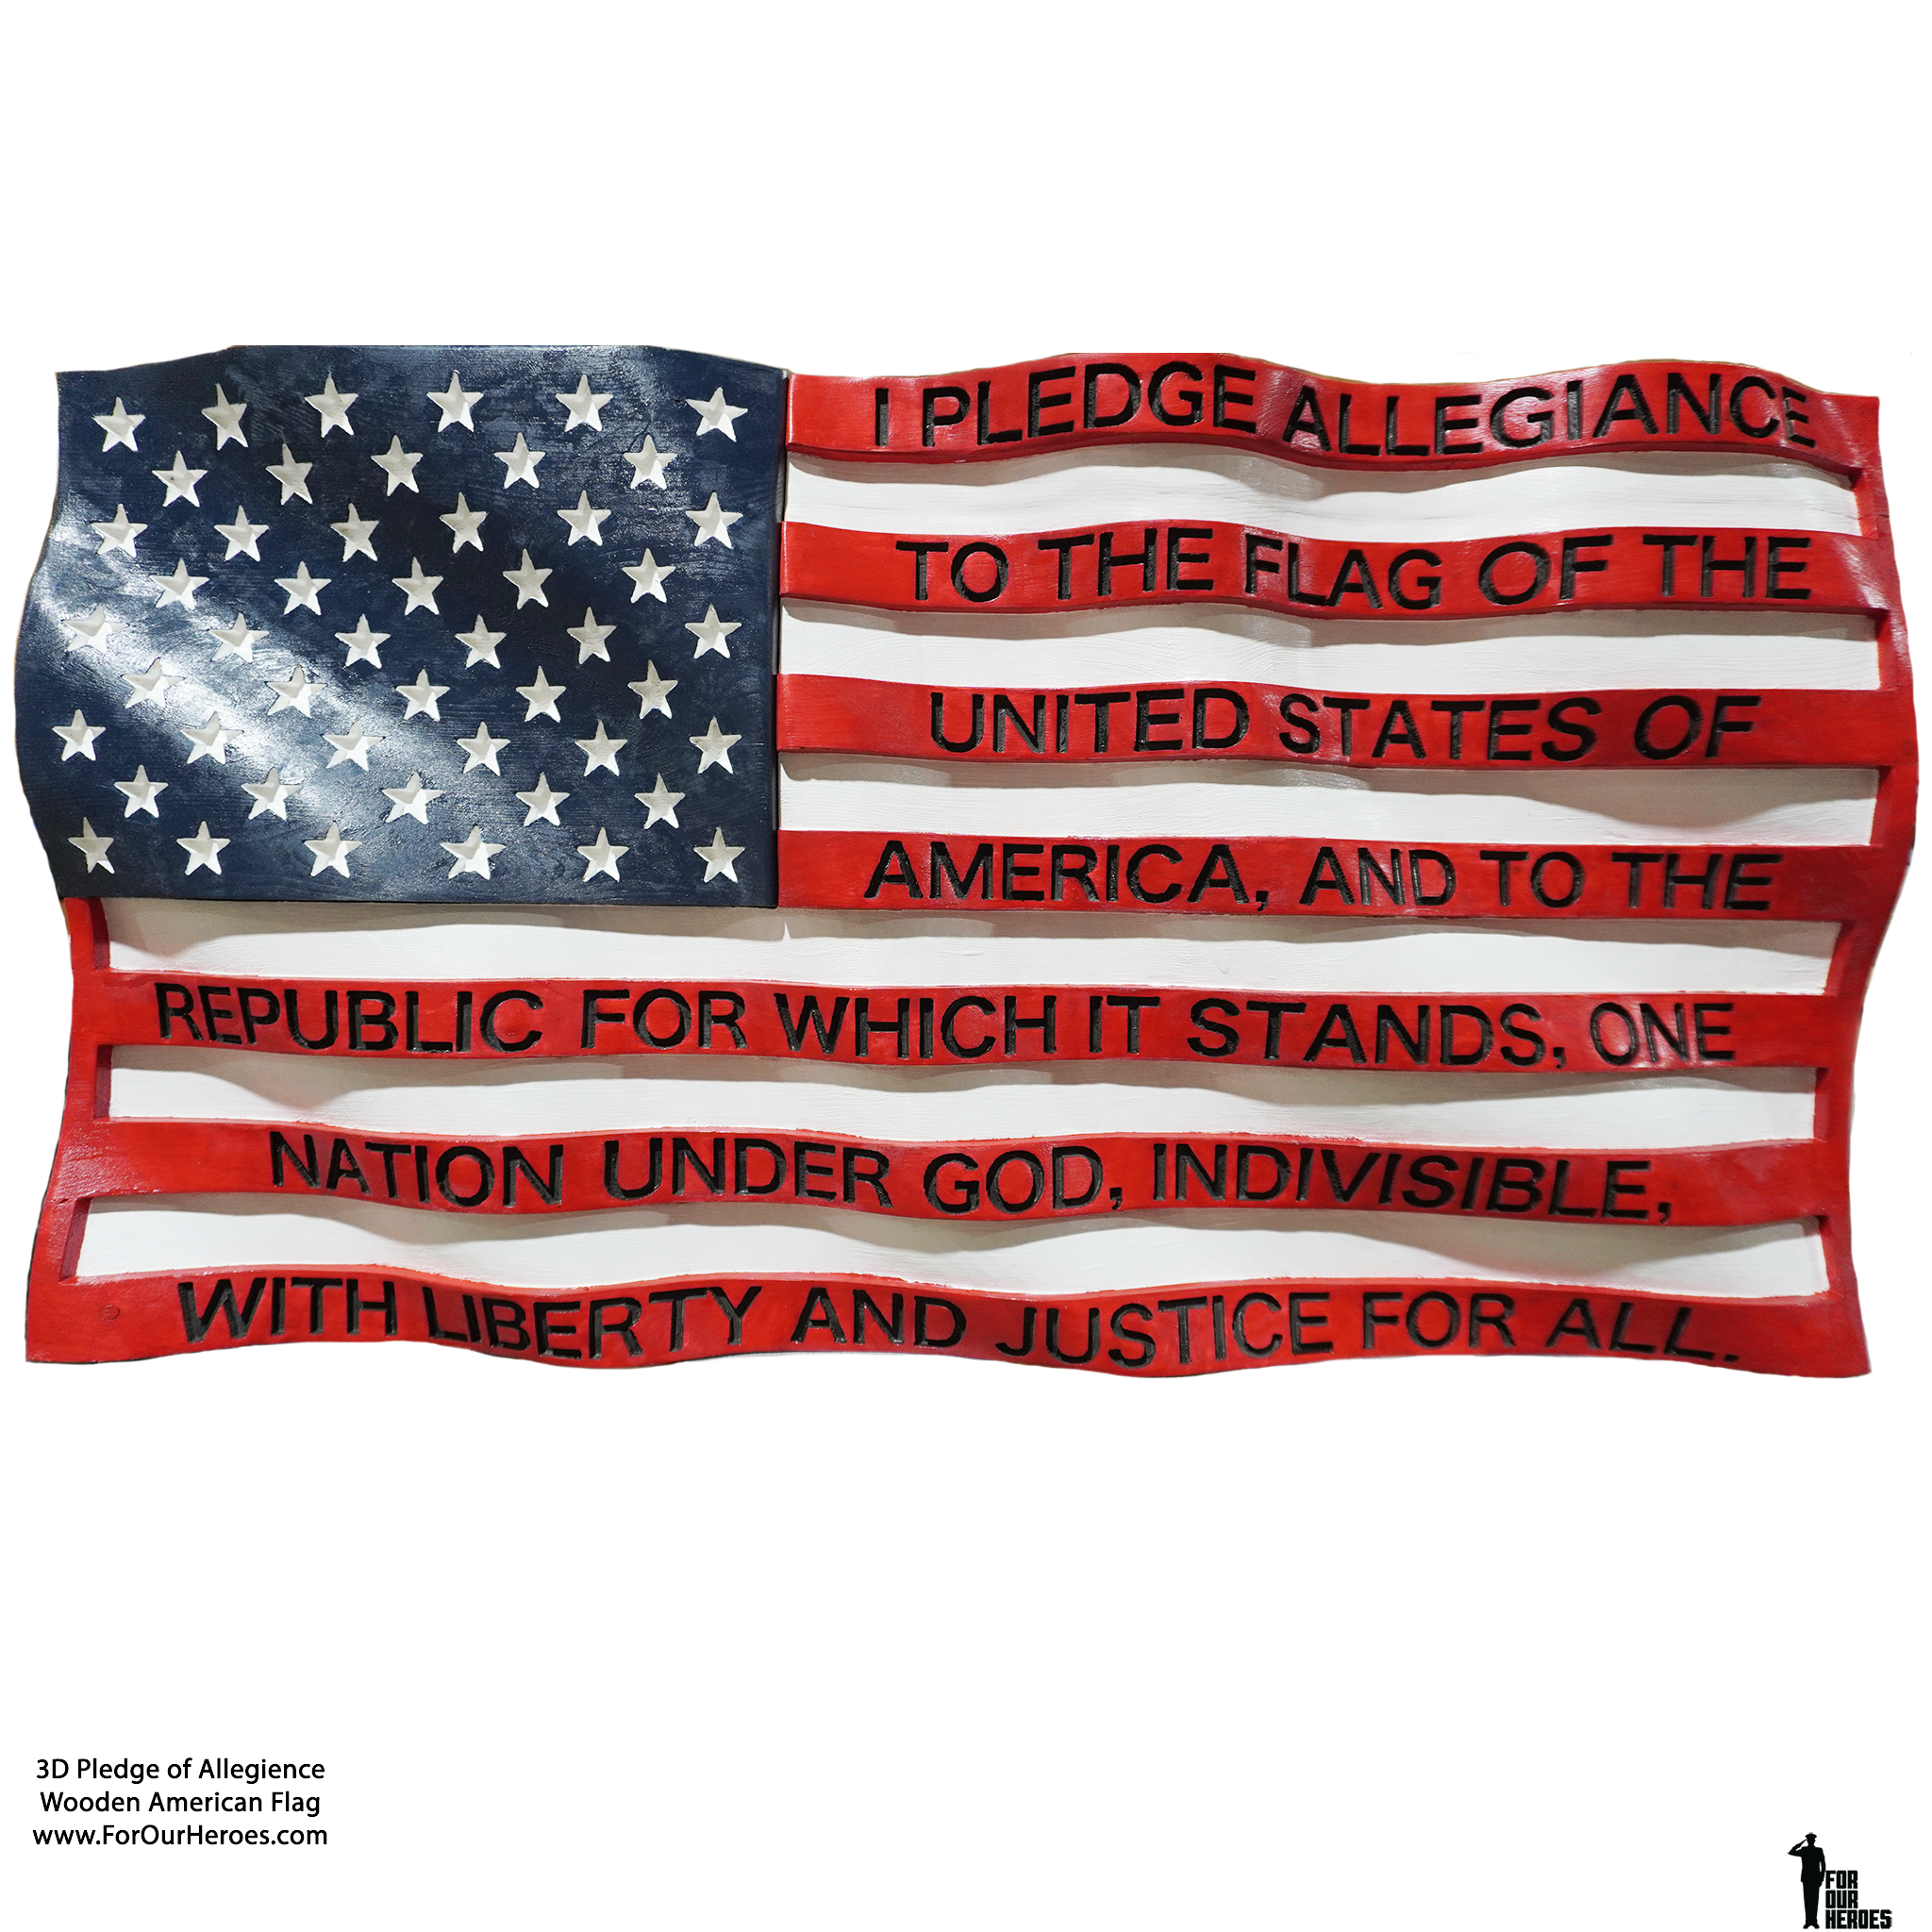 3D PLEDGE OF ALLEGIANCE Wooden American Flag - 0